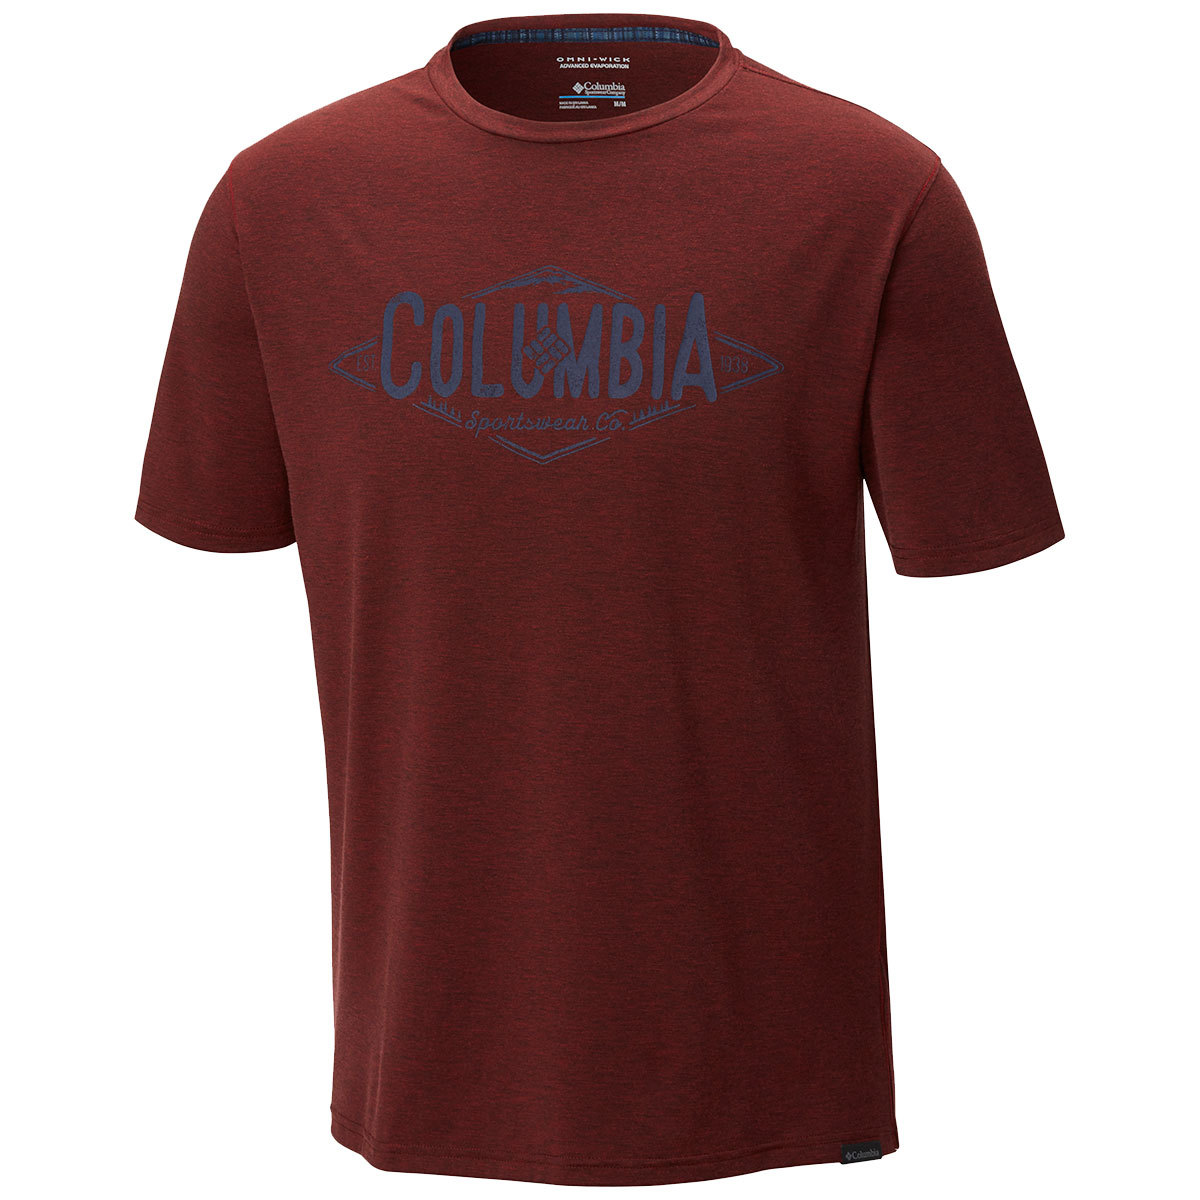 Columbia Men's Trial Shaker 11 Short-Sleeve Tee - Red, M